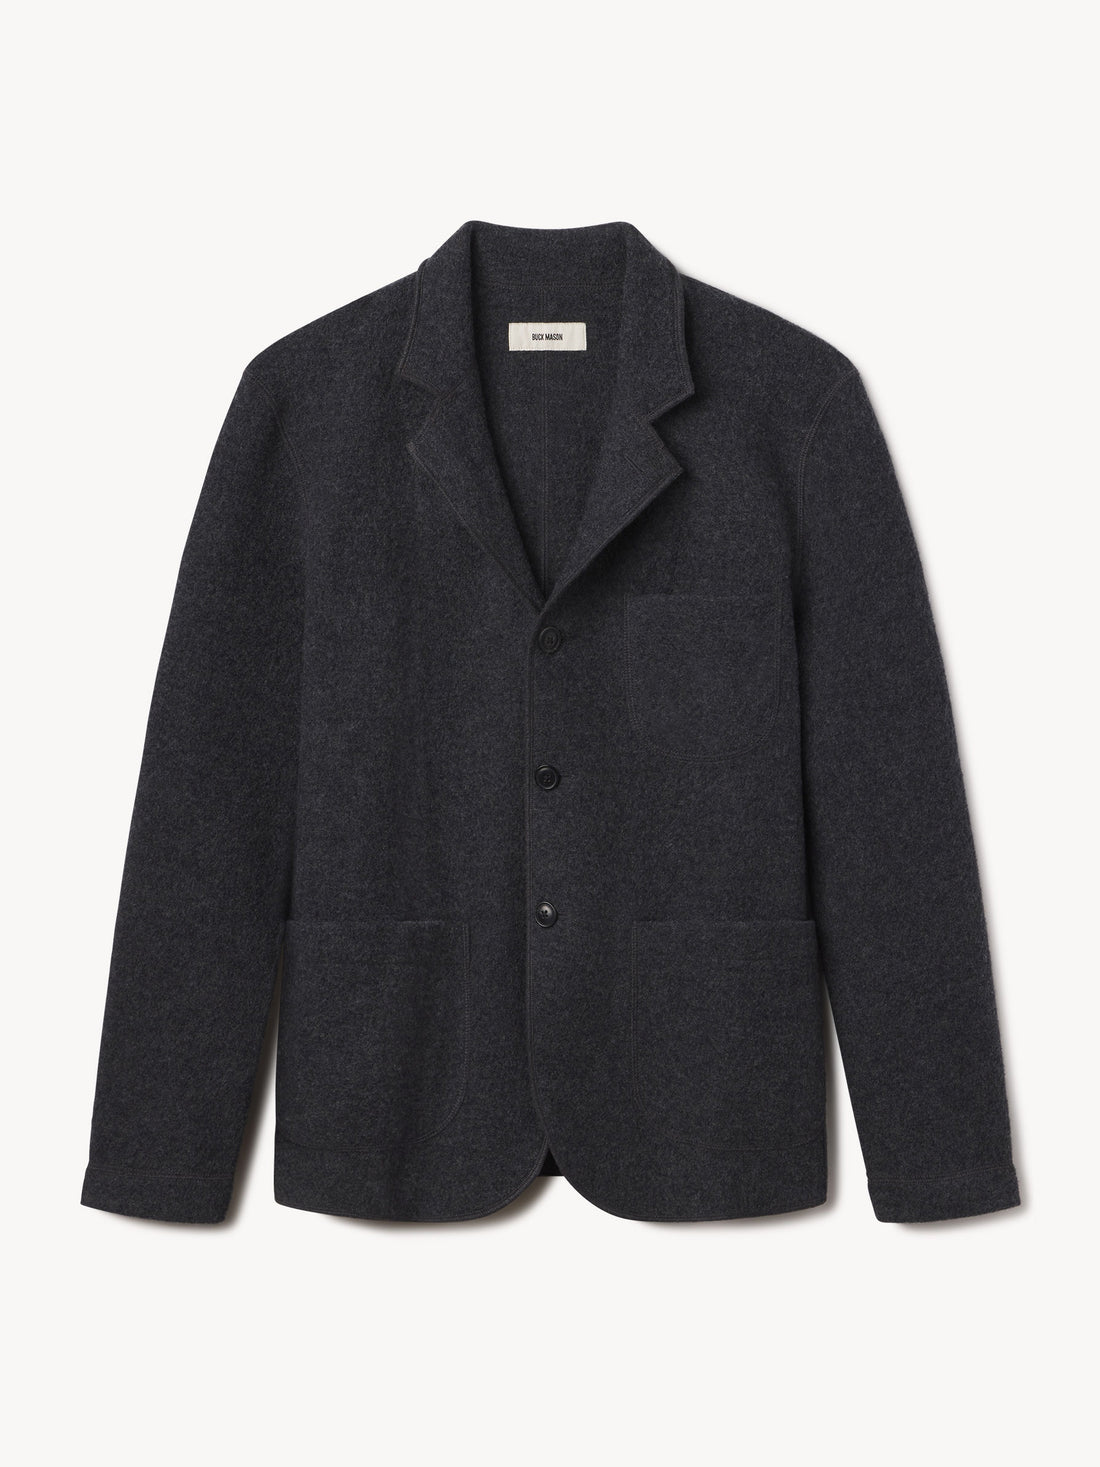 1900s Edwardian Men’s Suits and Coats Chore Jacket |  Buck Mason  AT vintagedancer.com